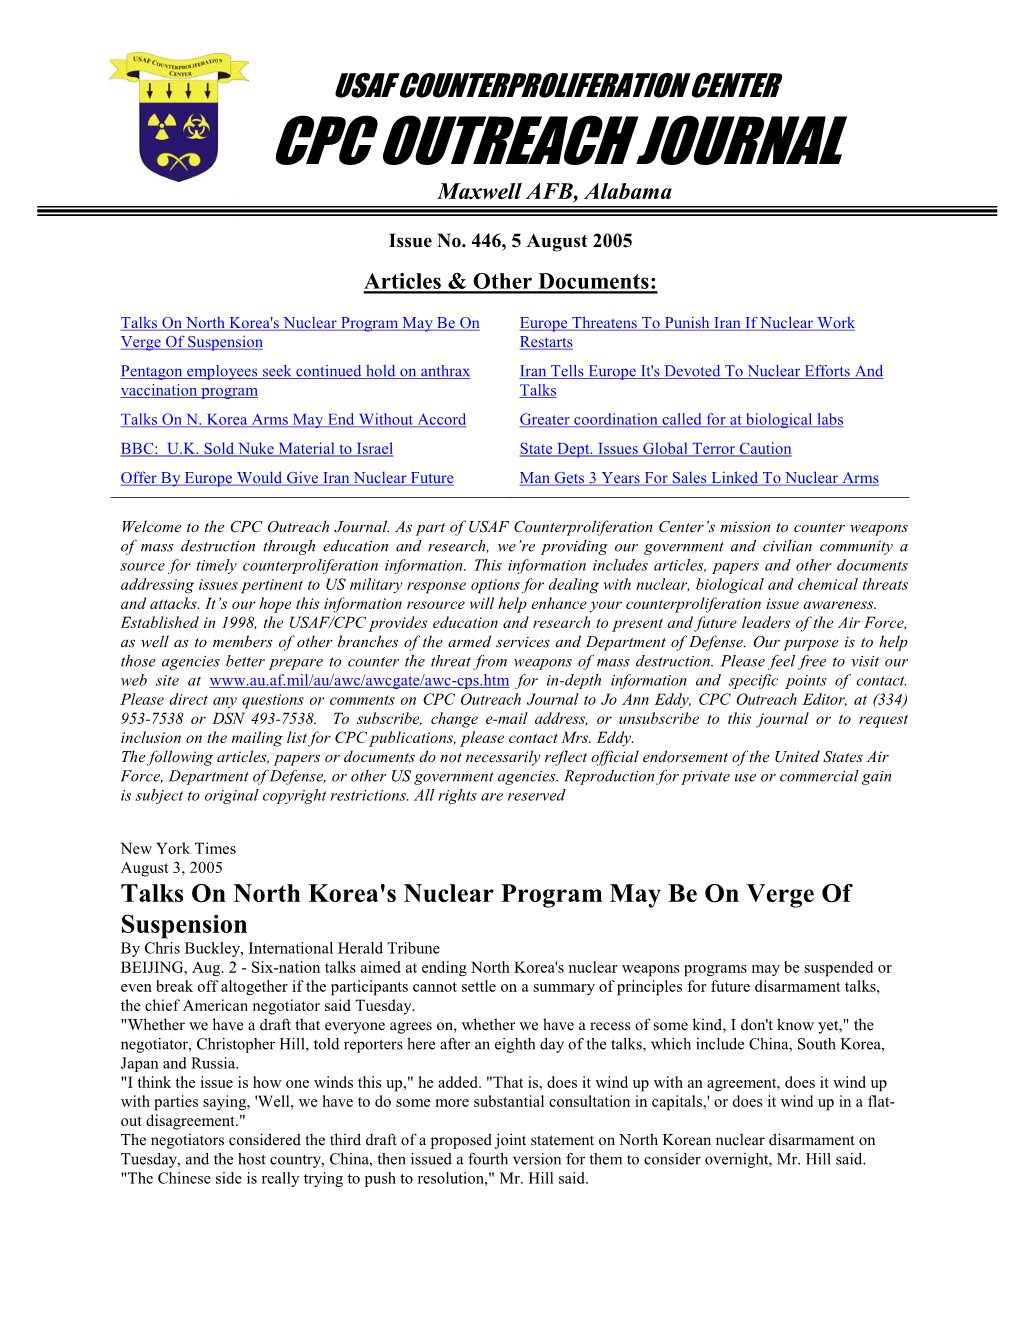 USAF Counterproliferation Center CPC Outreach Journal #446